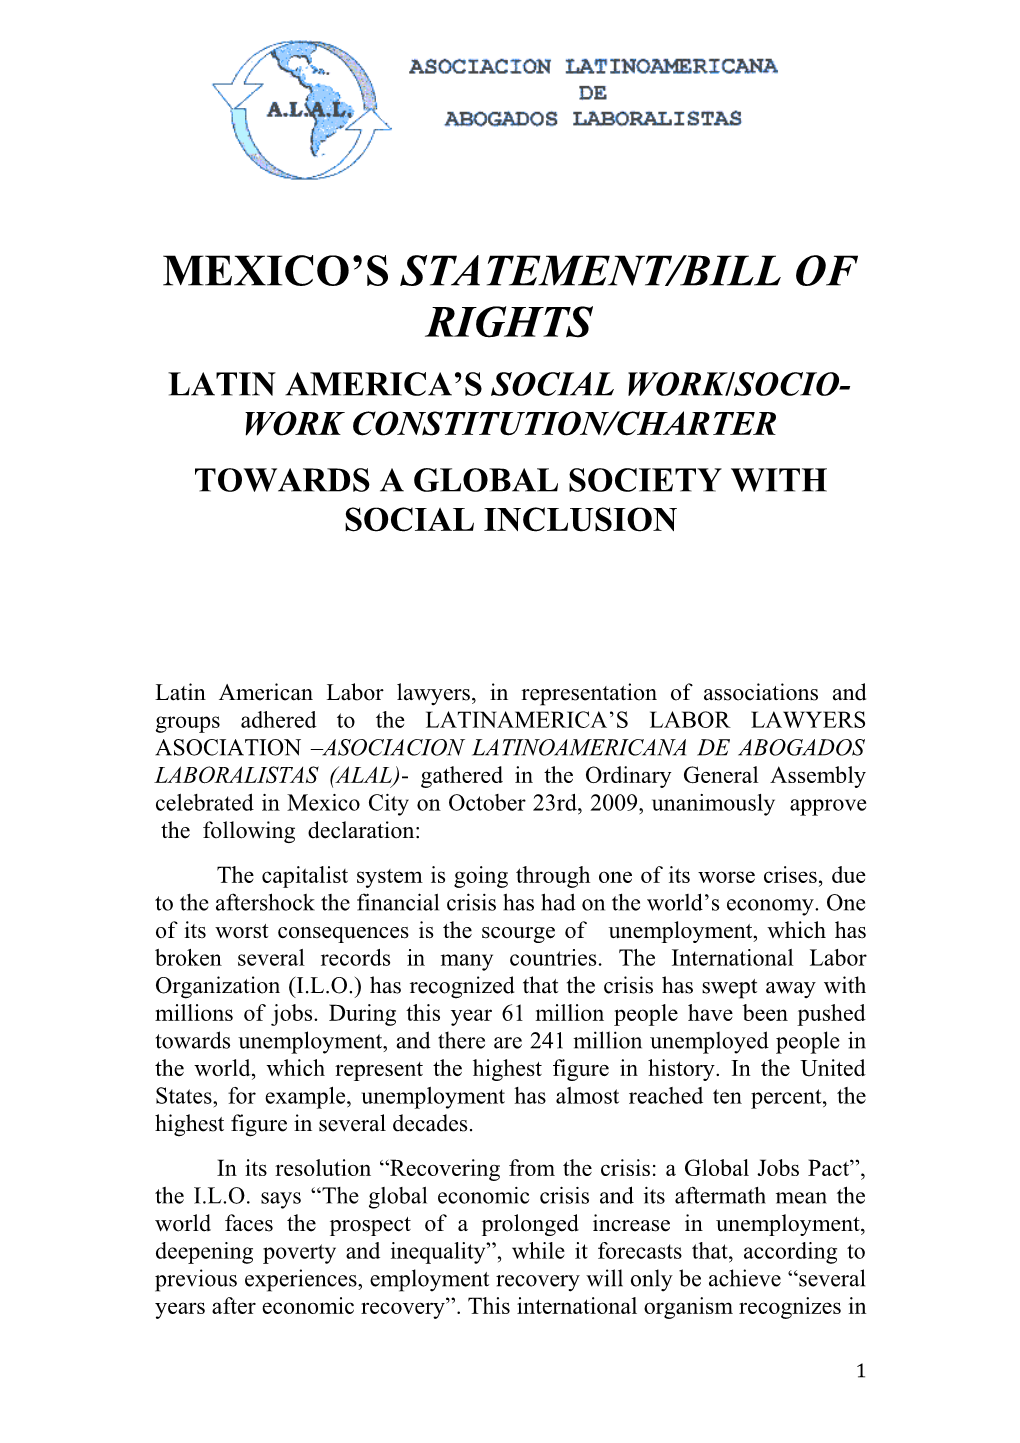 Latin America S Social Work/Socio-Workconstitution/Charter